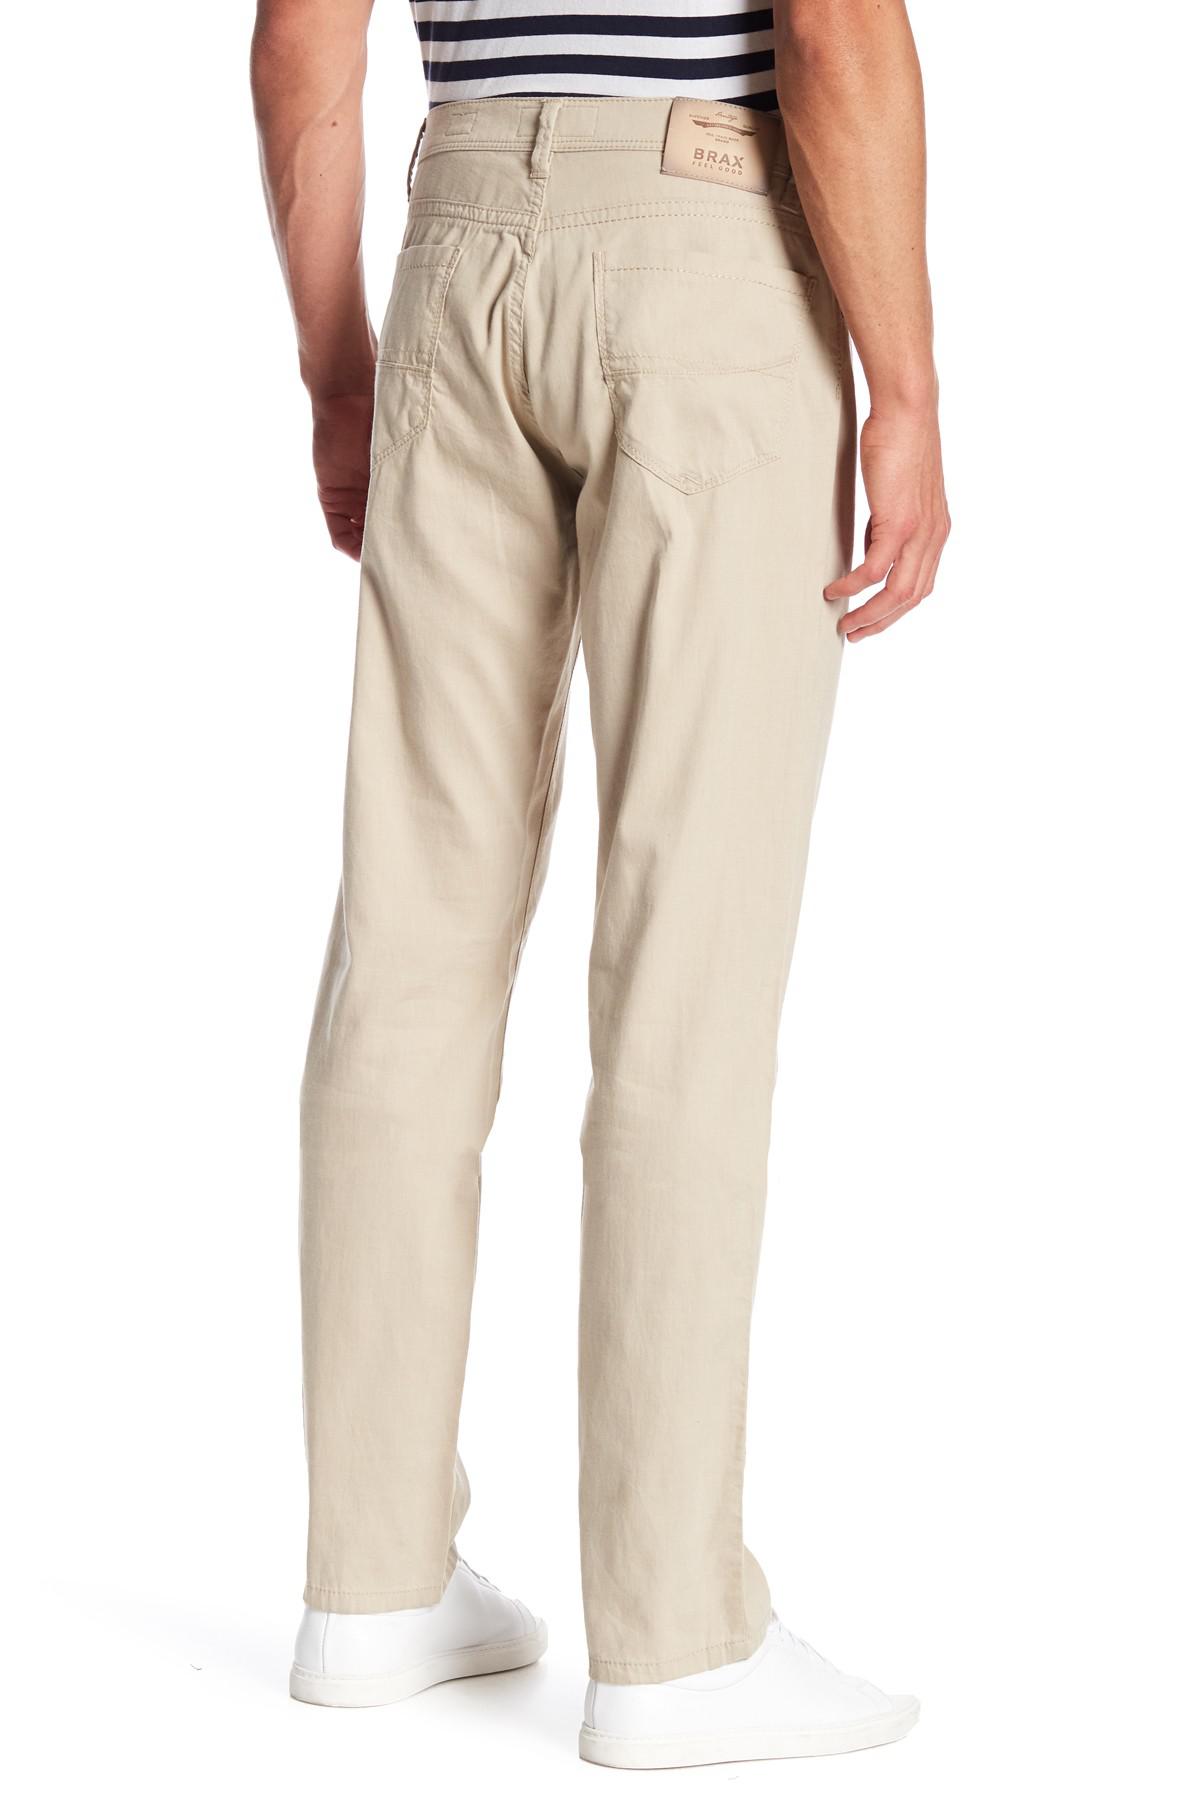 Brax Cadiz Lightweight Pants in Natural for Men | Lyst